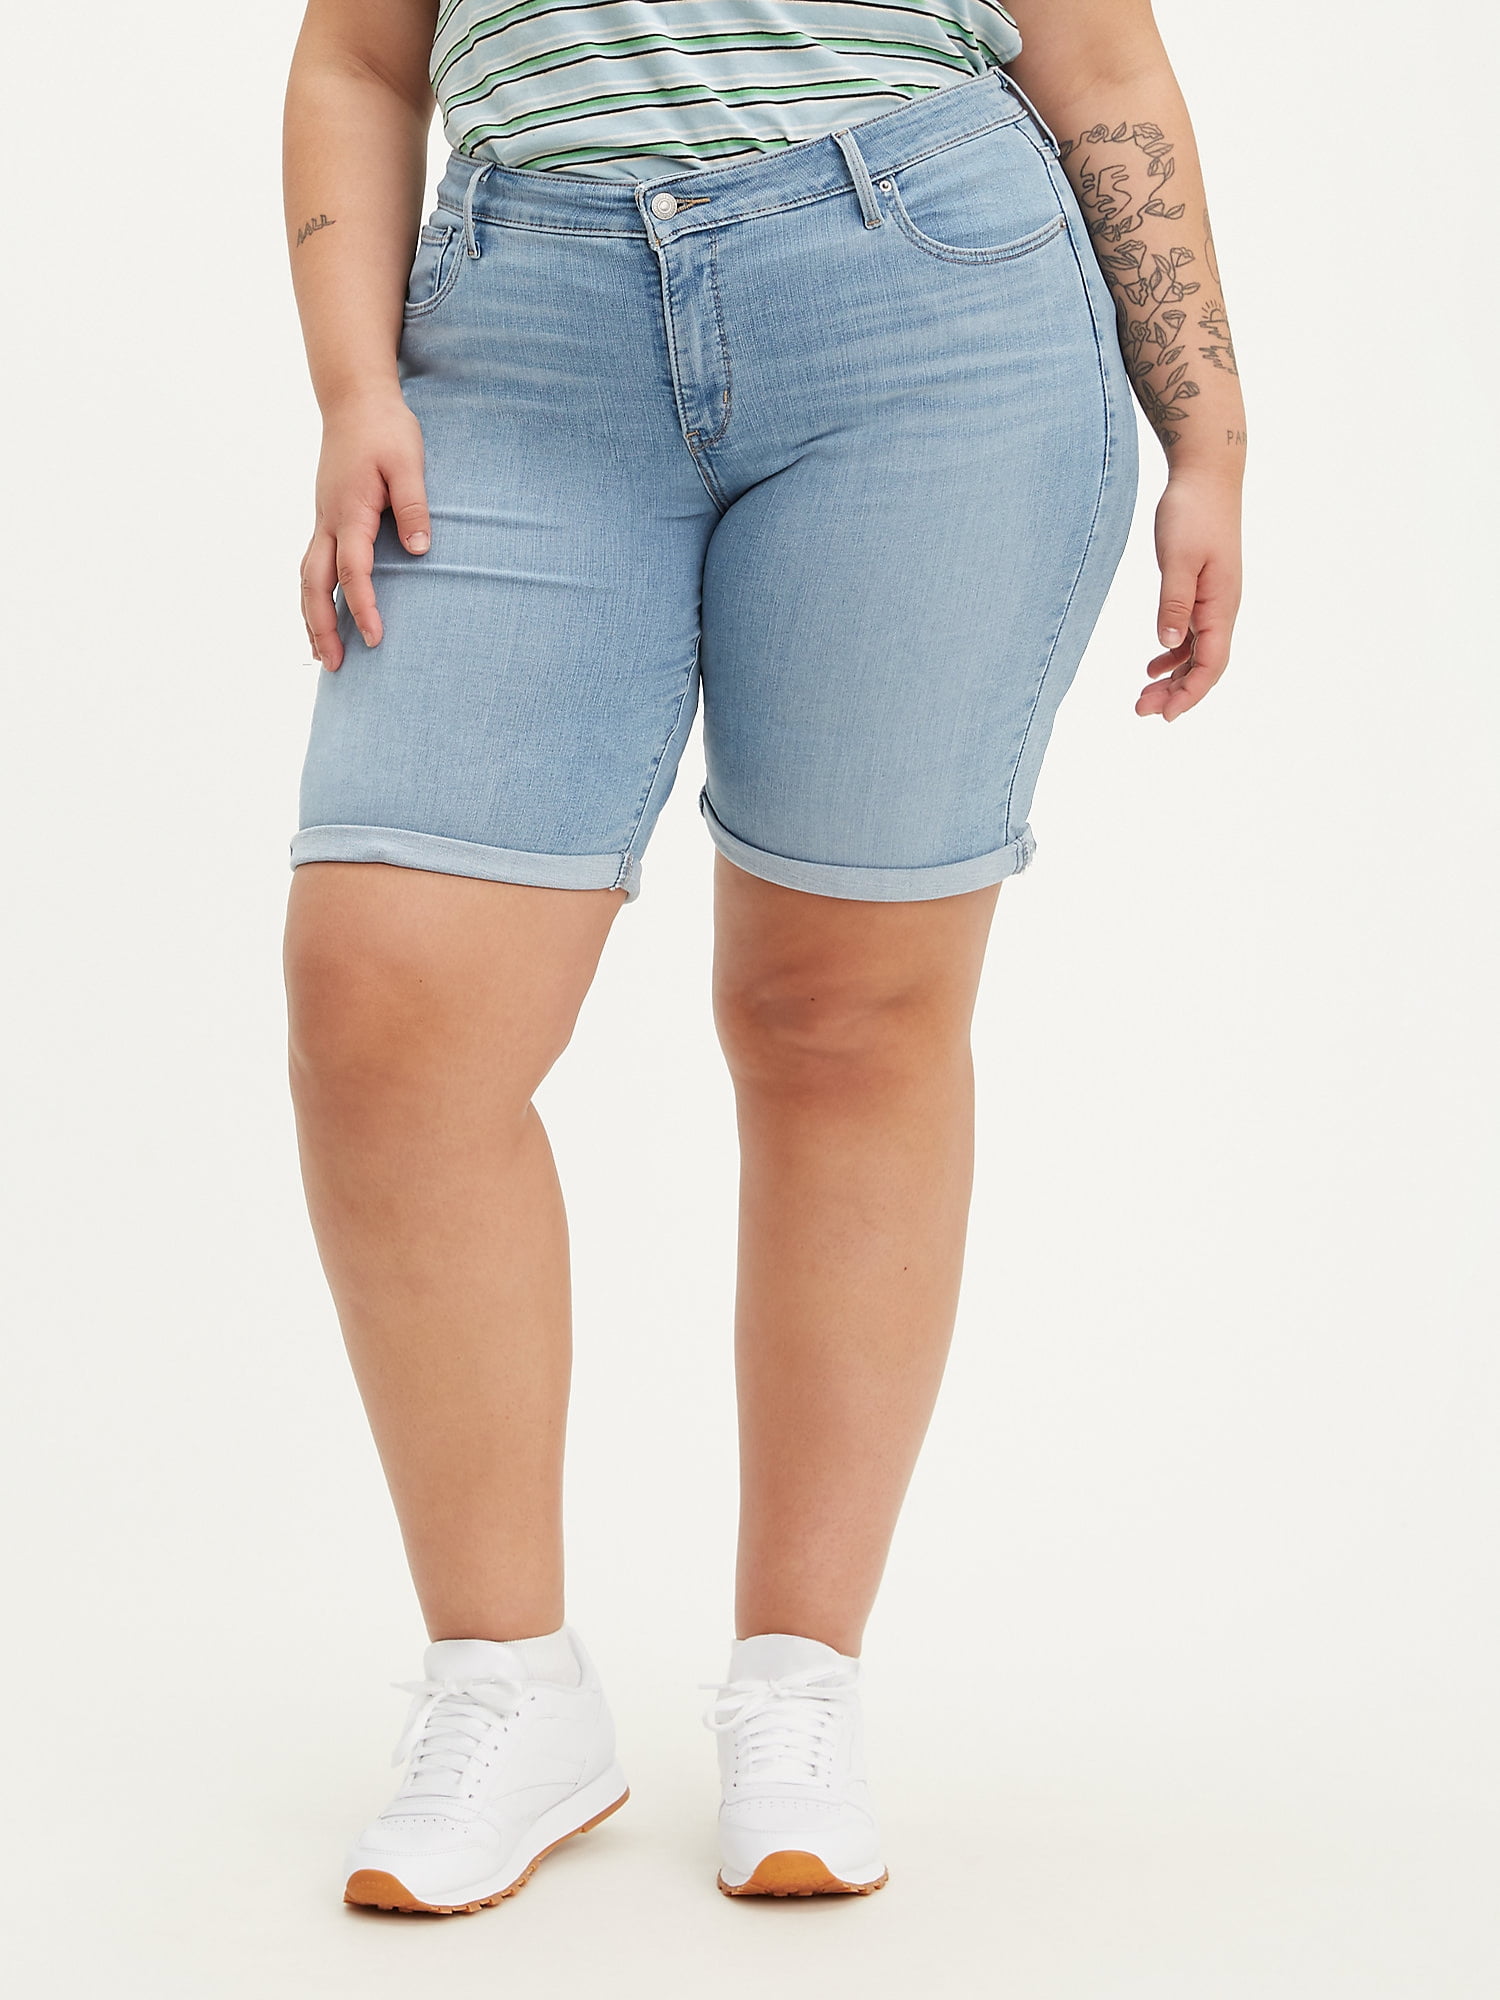 Levi’s Women's Plus Size Shaping Bermuda Shorts - Walmart.com